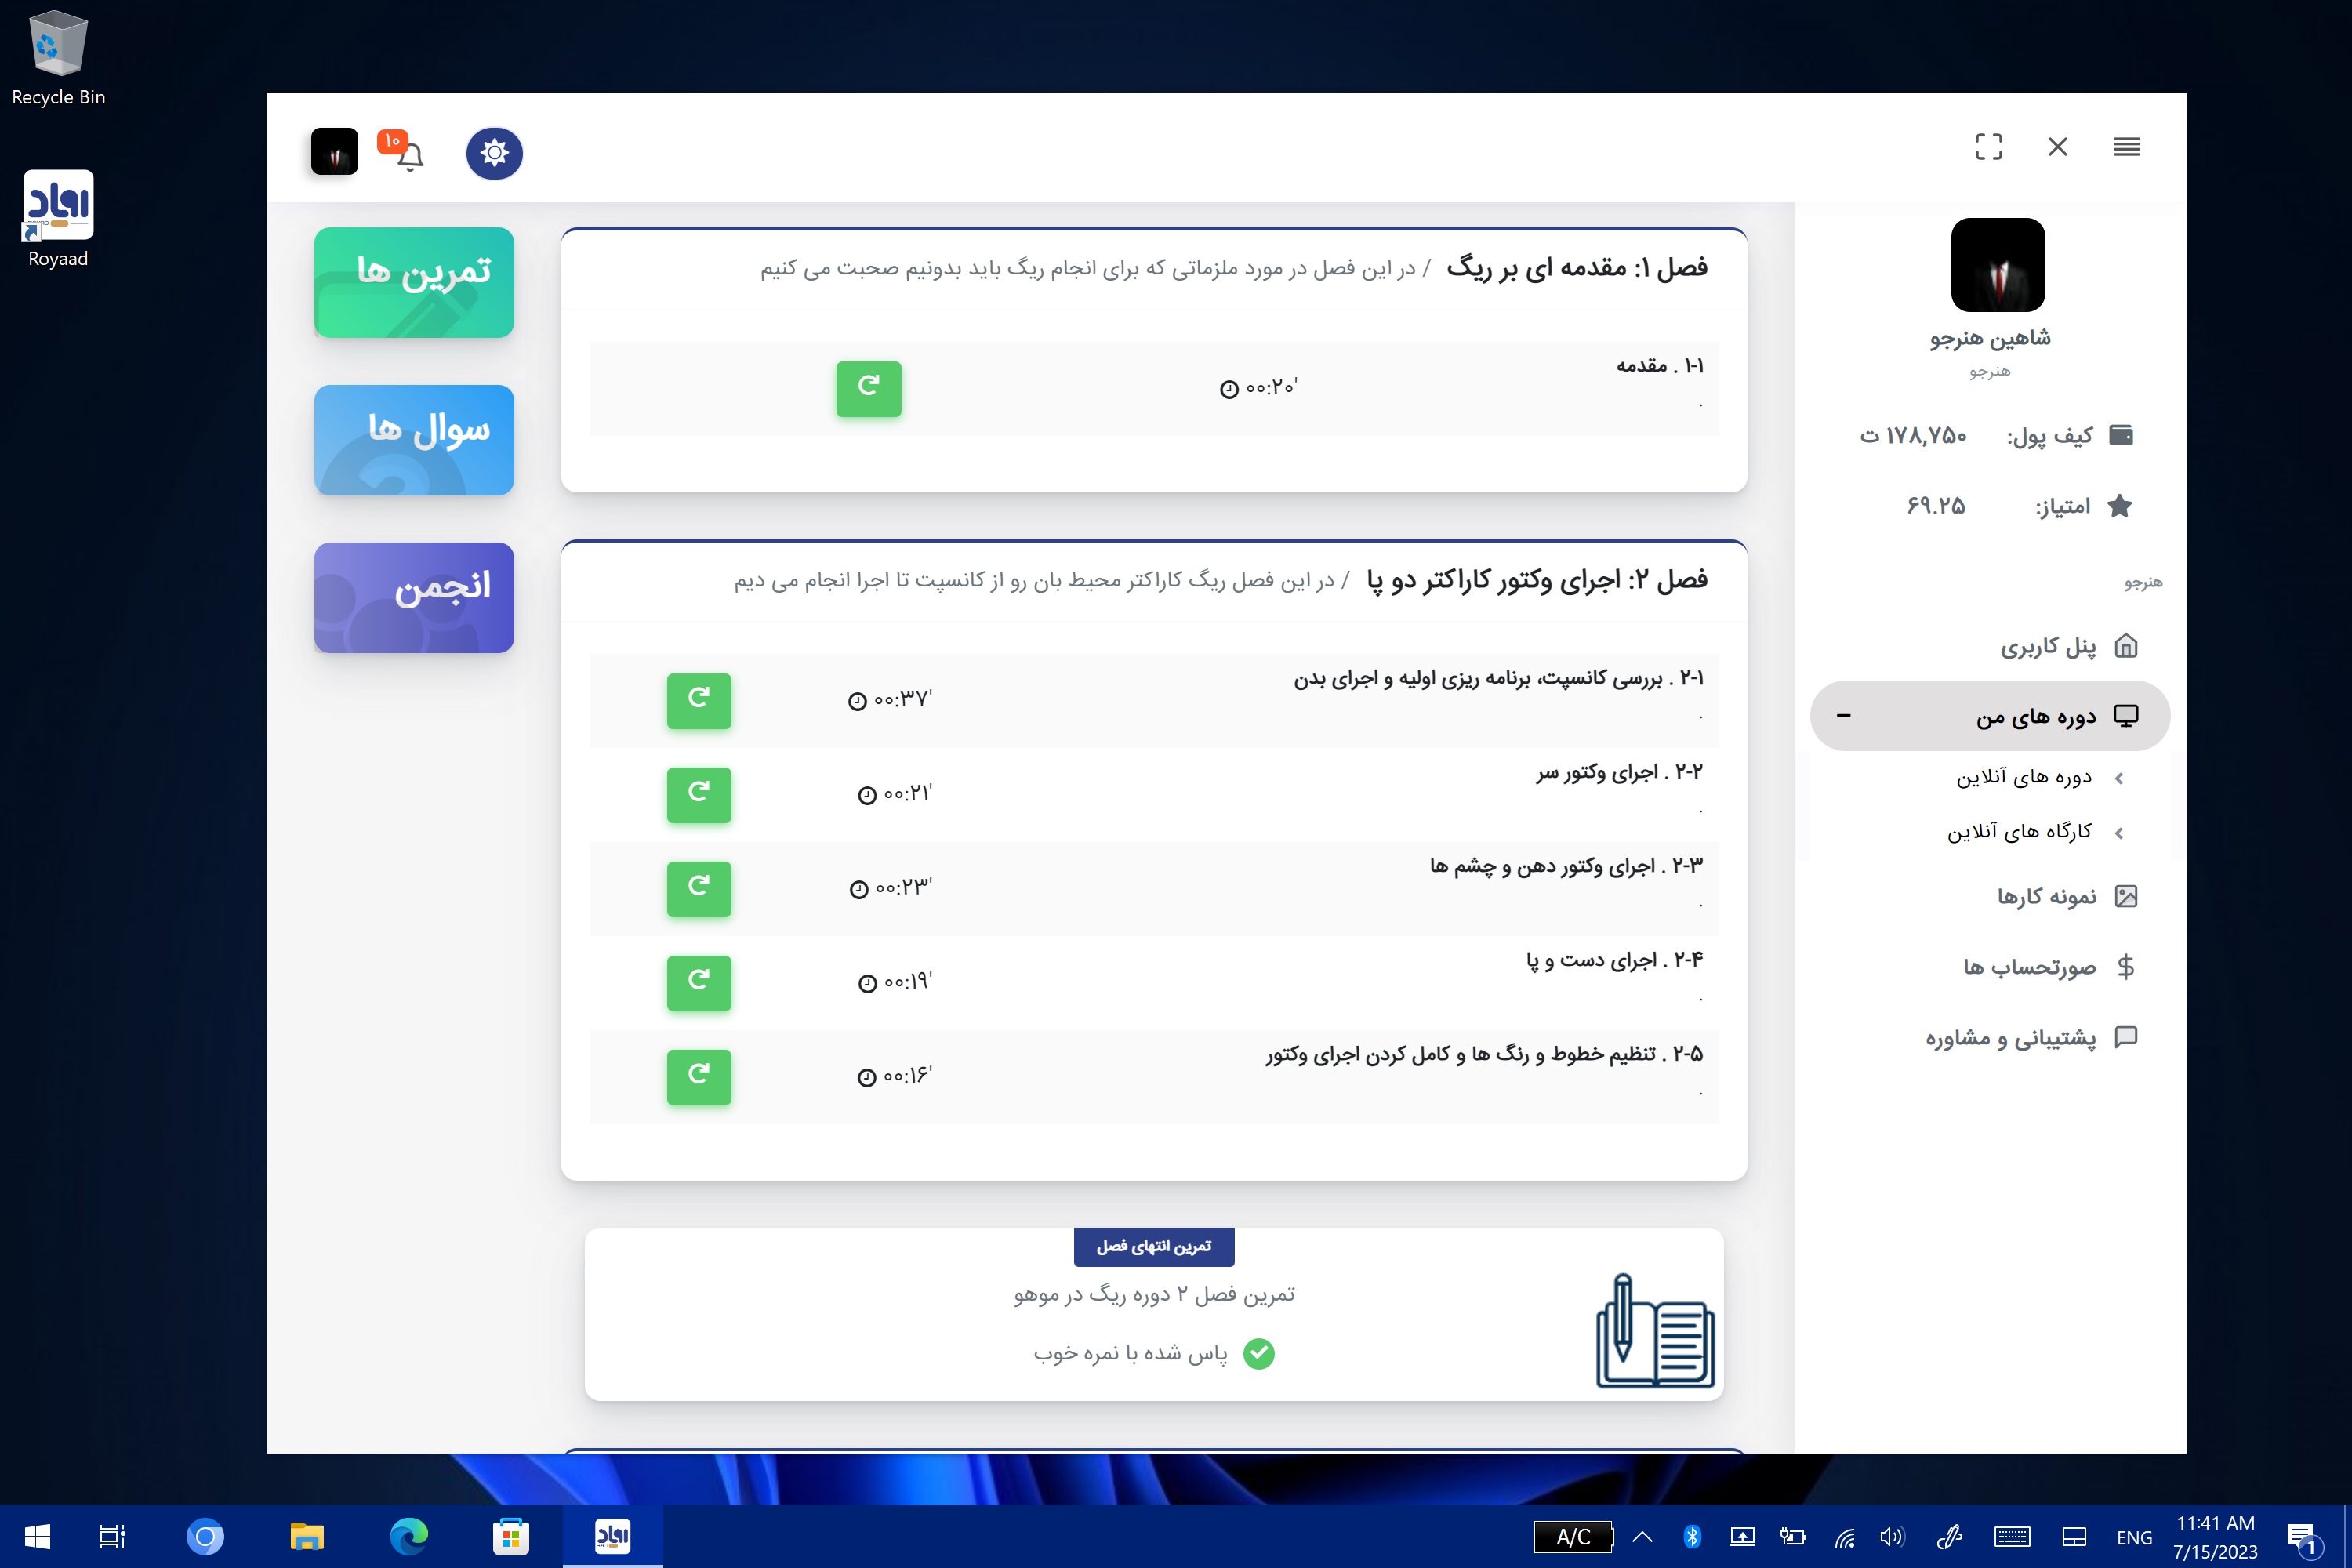 Shahinsoft.ir Royaad desktop application Online course dashboard